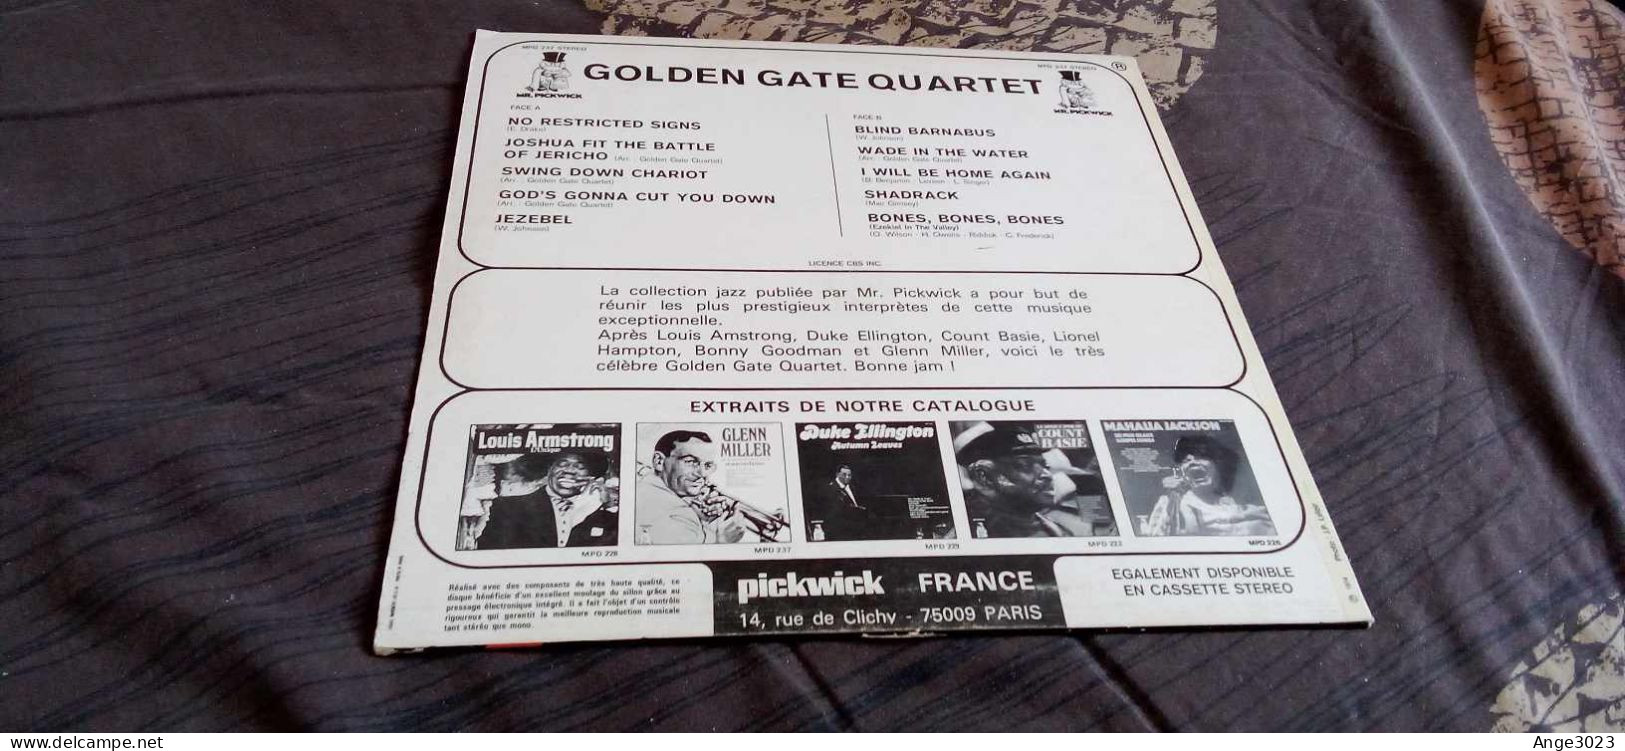 GOLDEN GATE QUARTET "Jazz Session" - Jazz